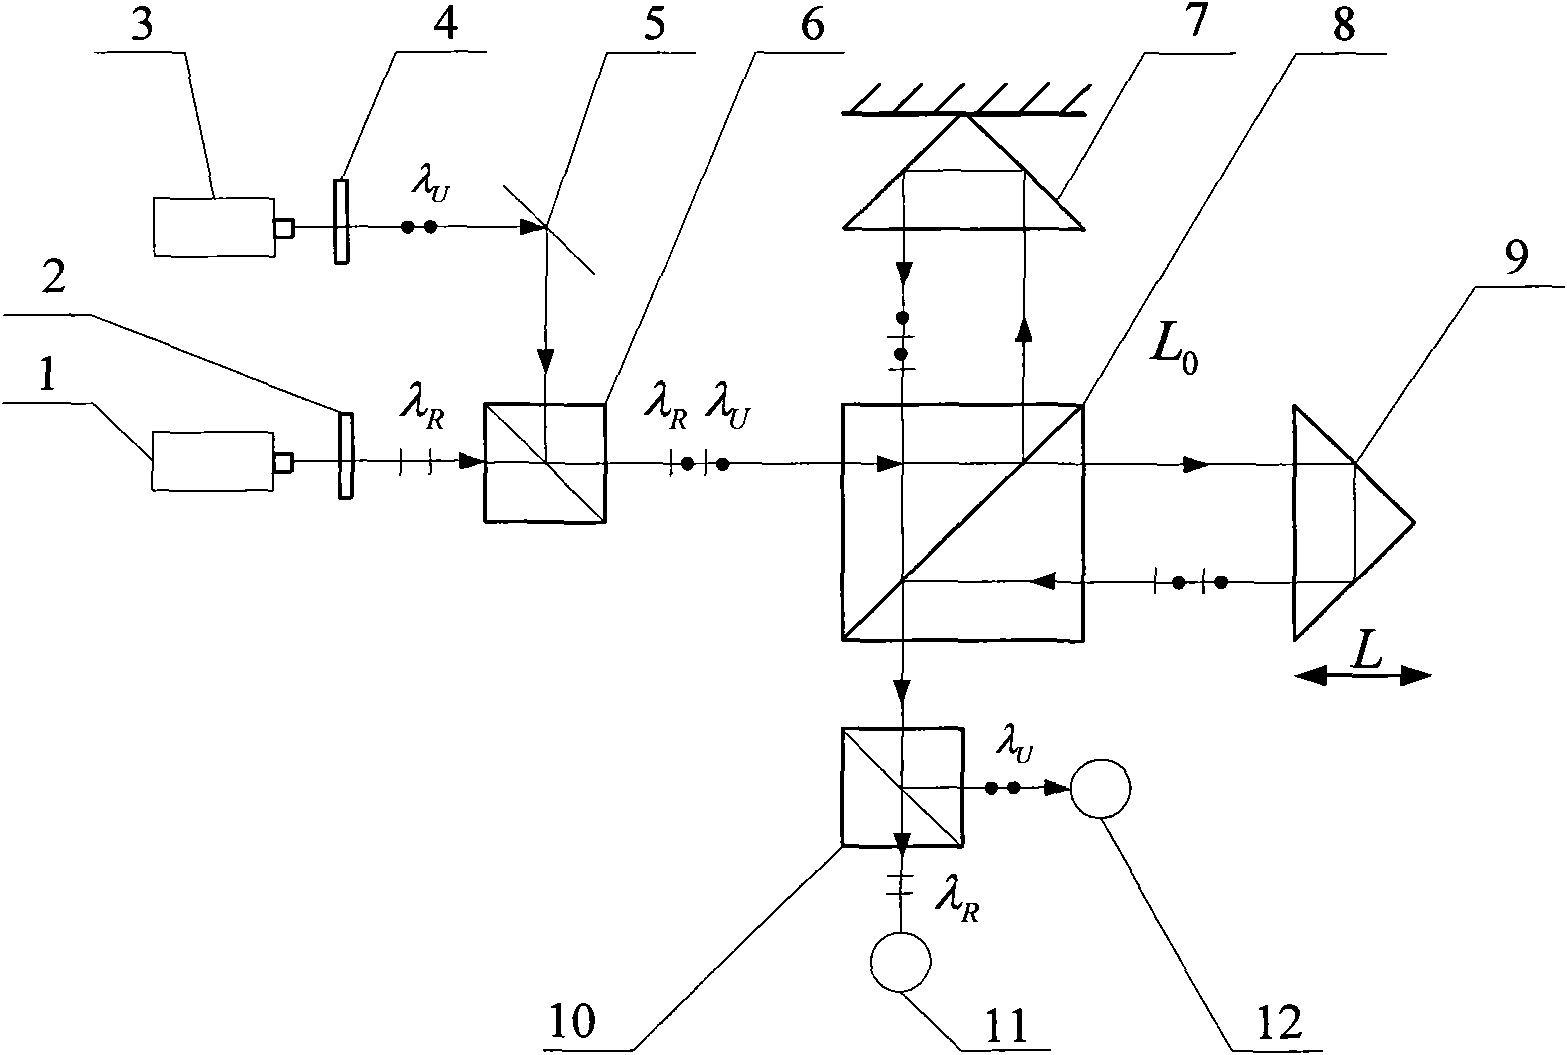 Method and device for measuring laser wavelength based on bound wavelength